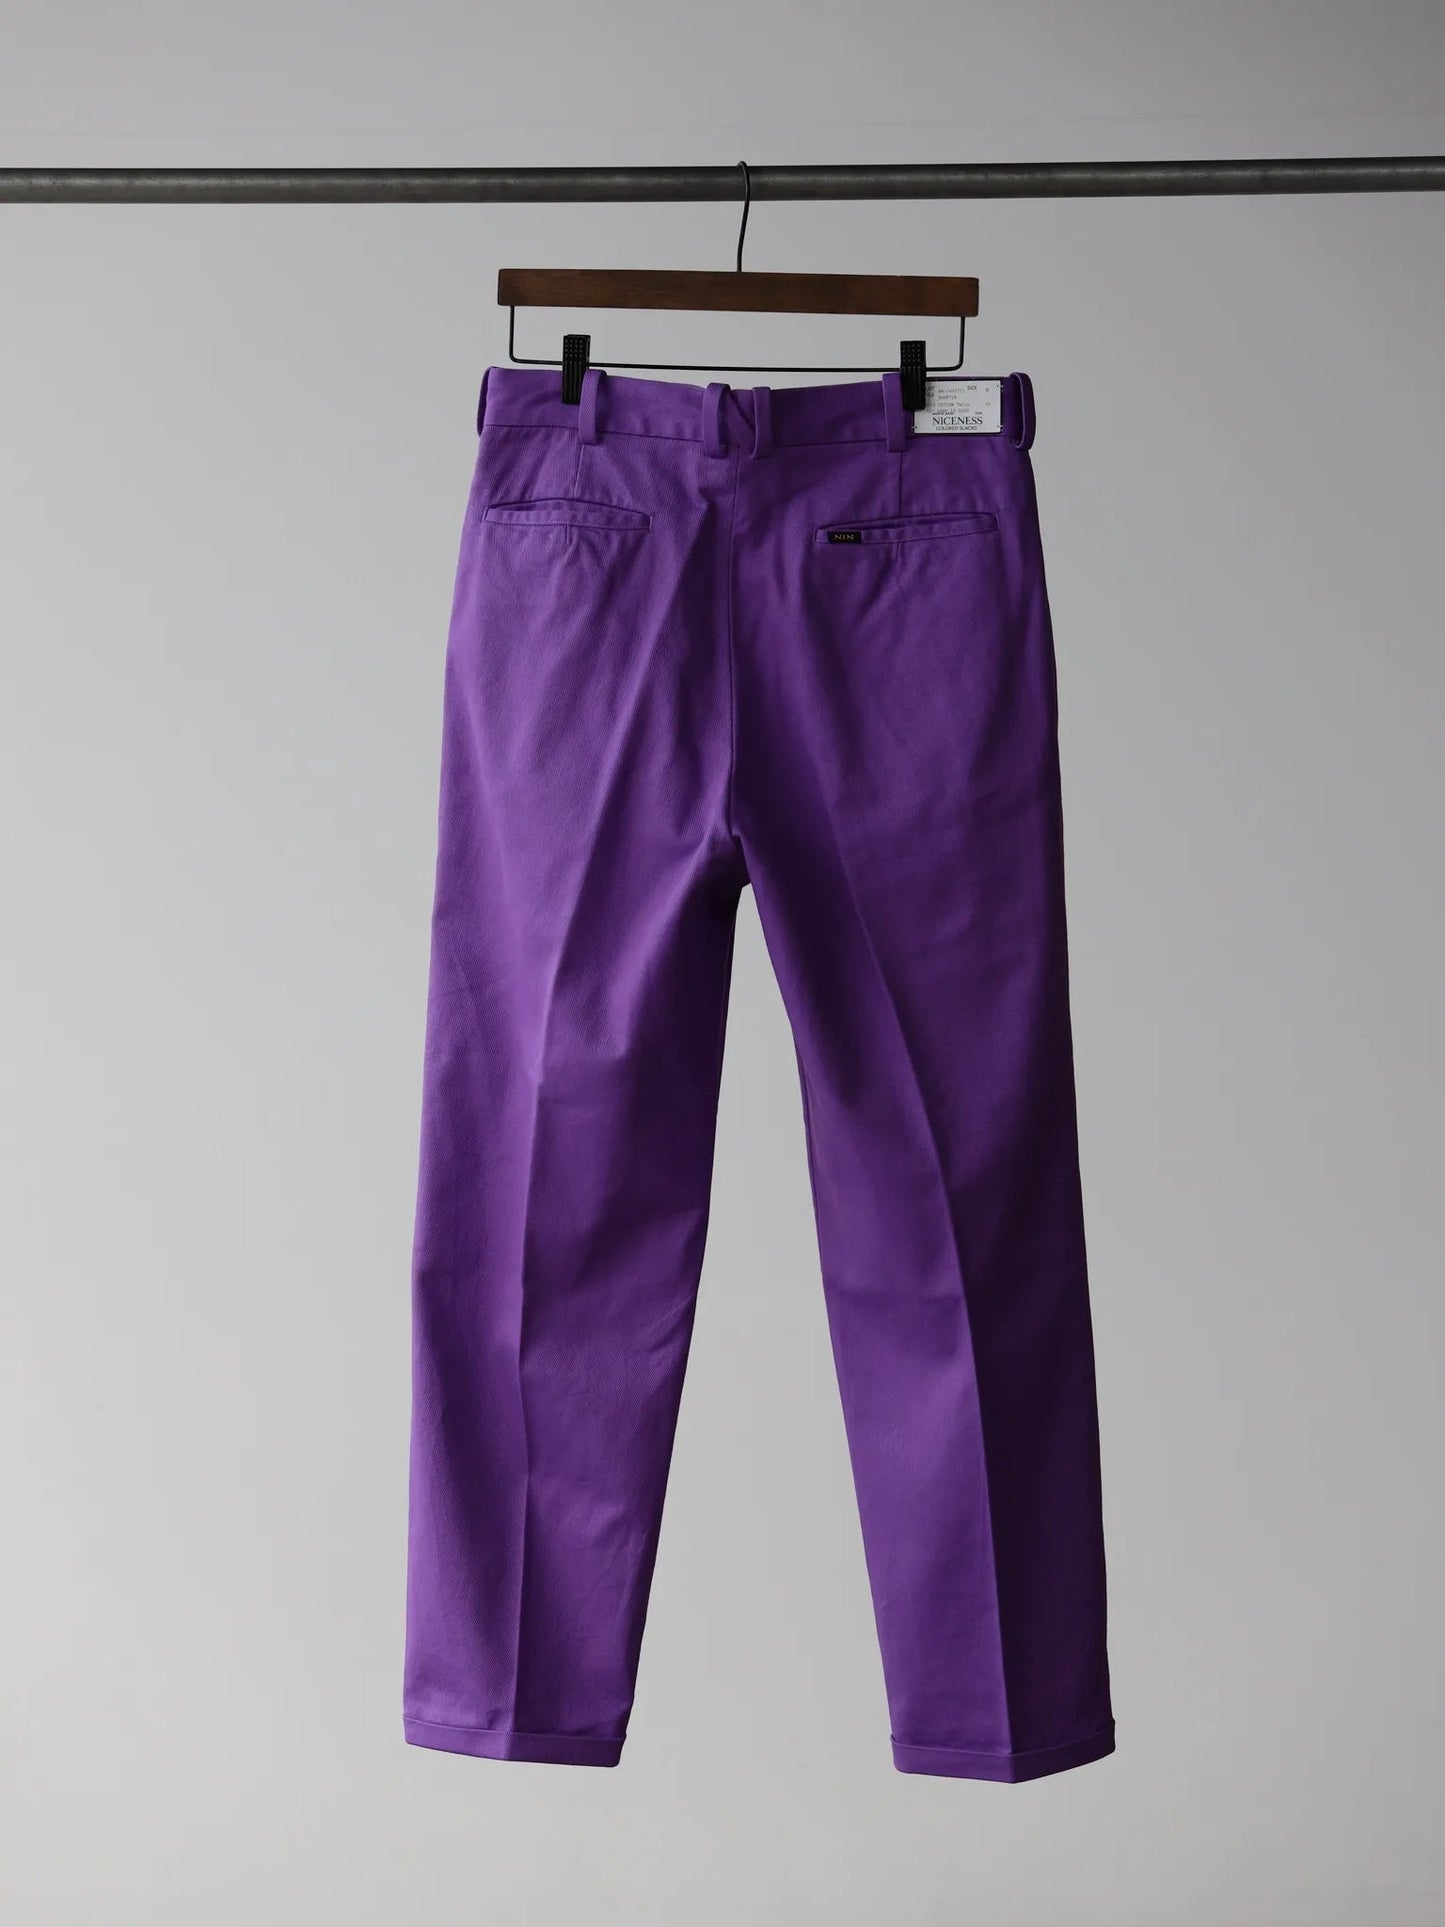 niceness-shorter-colored-slacks-purple-2